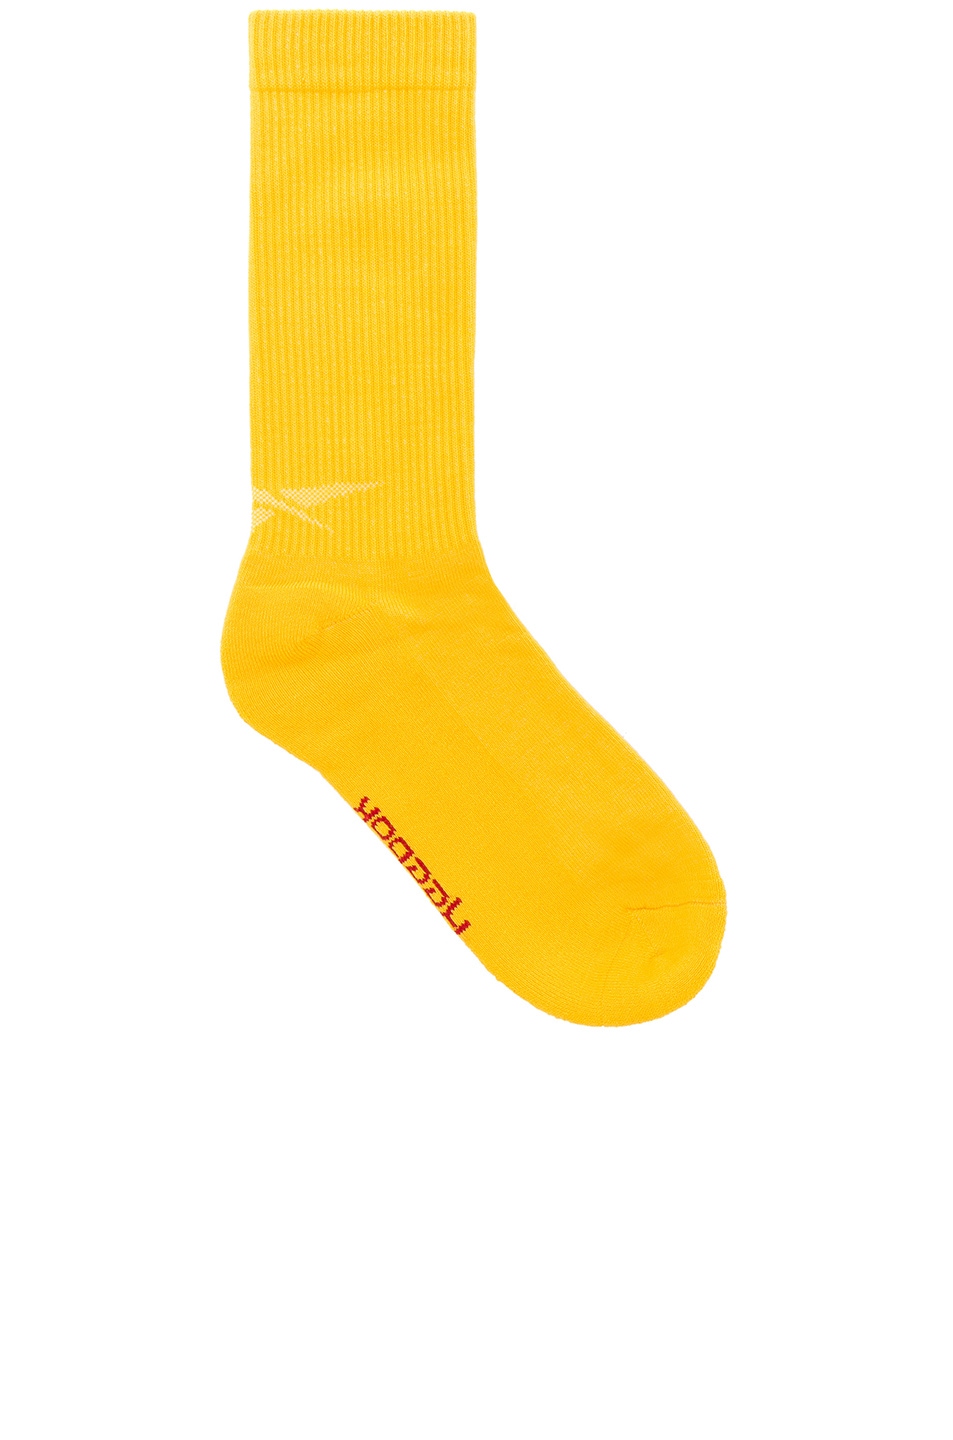 VETEMENTS x DHL Socks in Yellow | FWRD